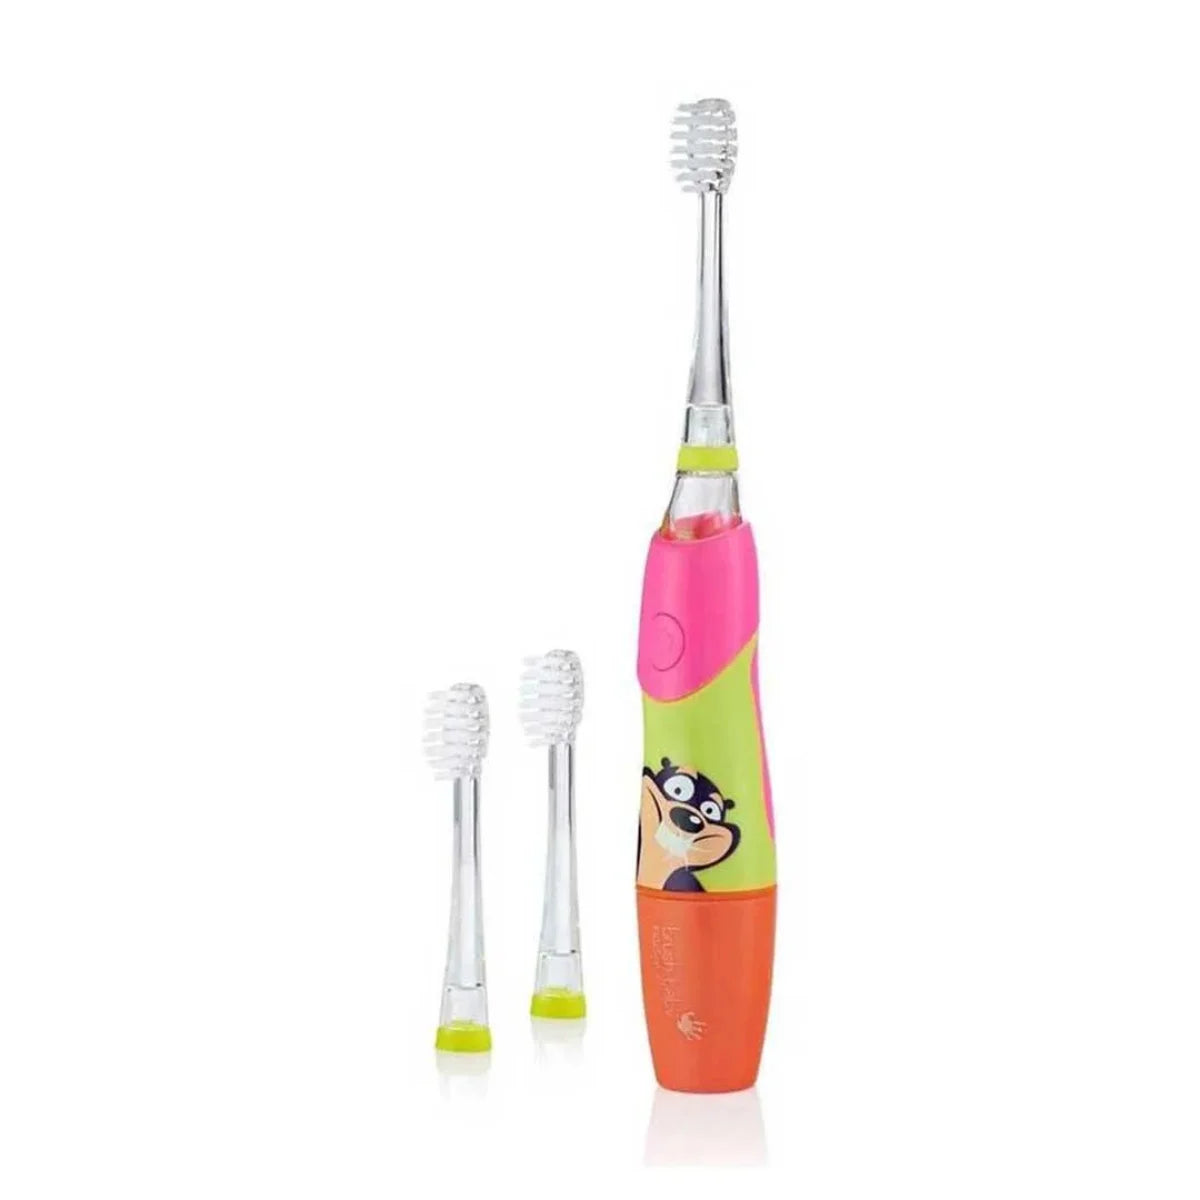 Pink KidzSonic Kids Battery Electric Toothbrush